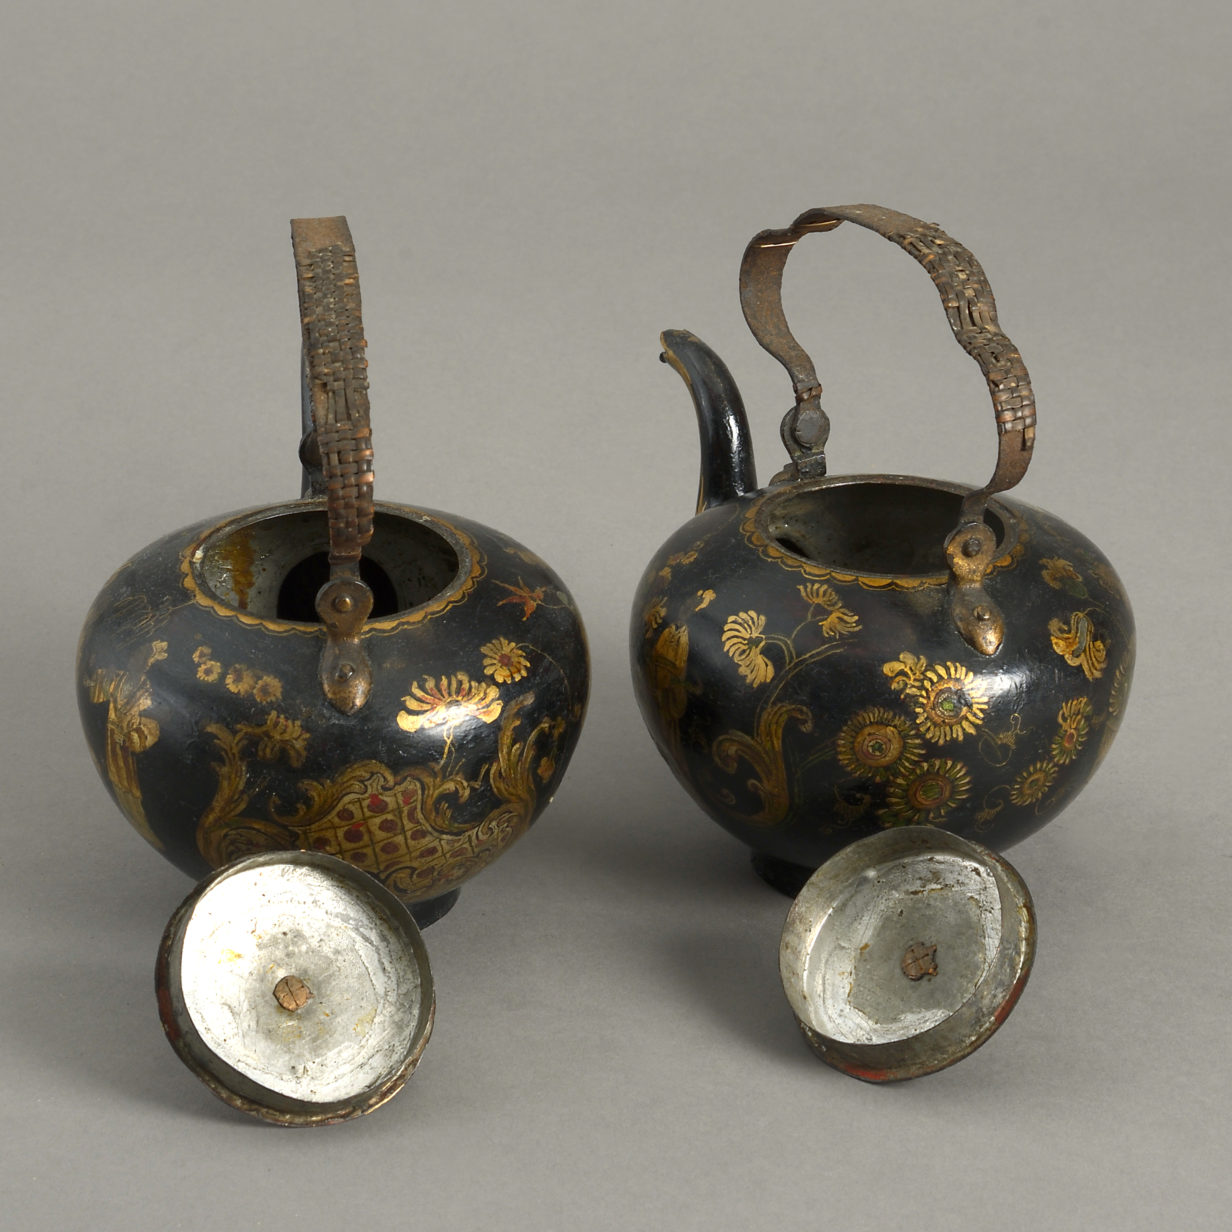 Pair of 18th century chinoiserie tole tea pots